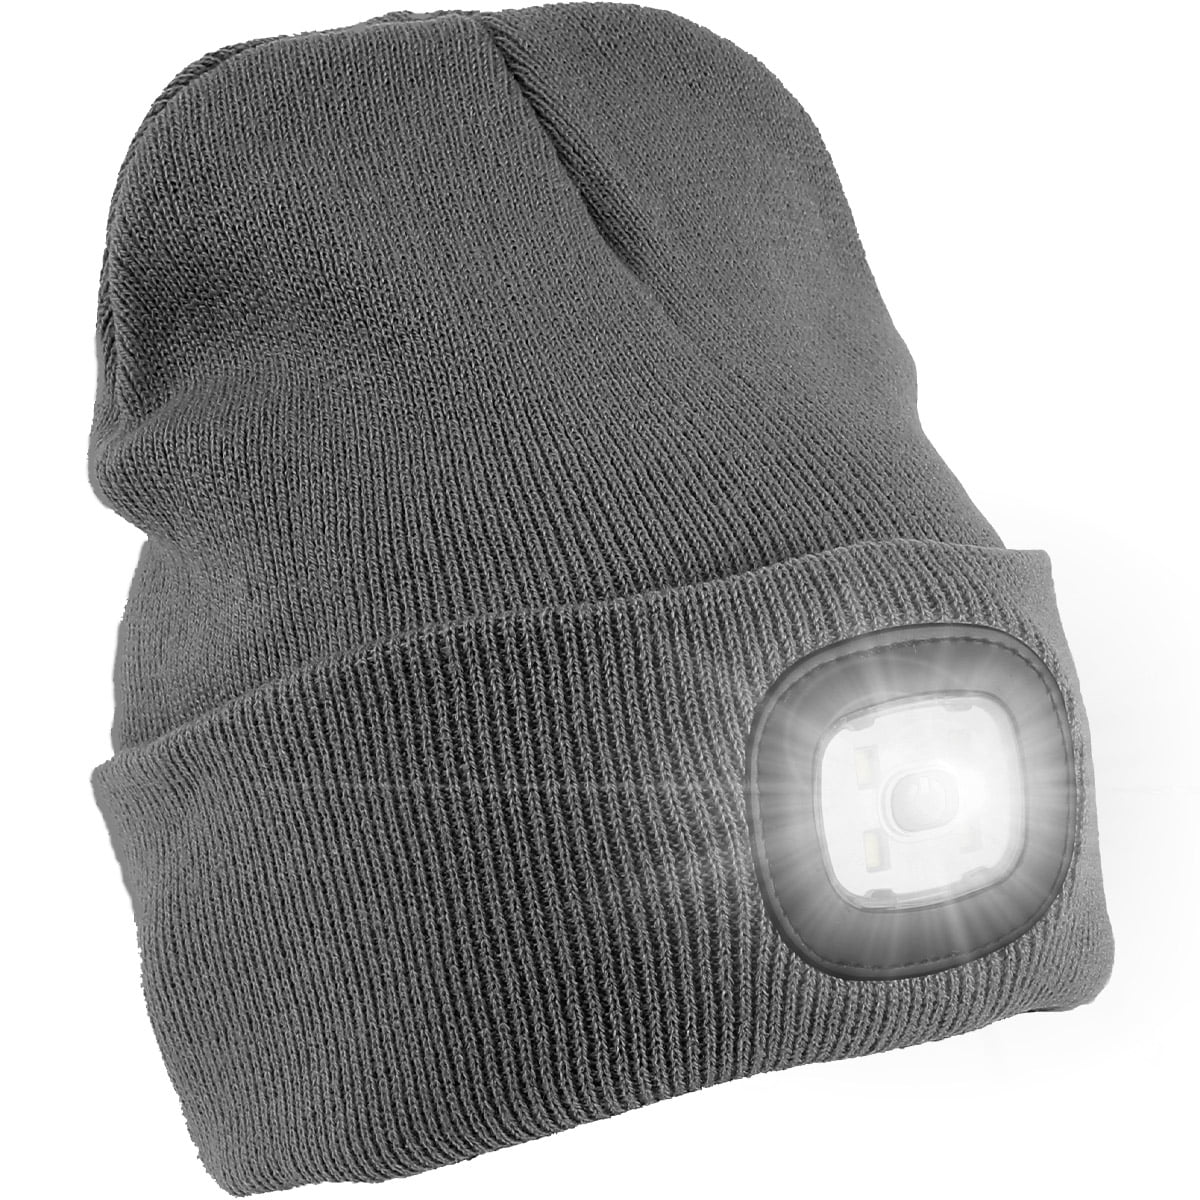 Eummy LED Beanie Hat Detachable LED Lighted Beanie Cap Adjustable  Brightness Lighting Headlight Hat Winter Warm Washable Headlamp Cap Unisex  Knitted Beanie with LED Light Gifts for Birthdays Chris